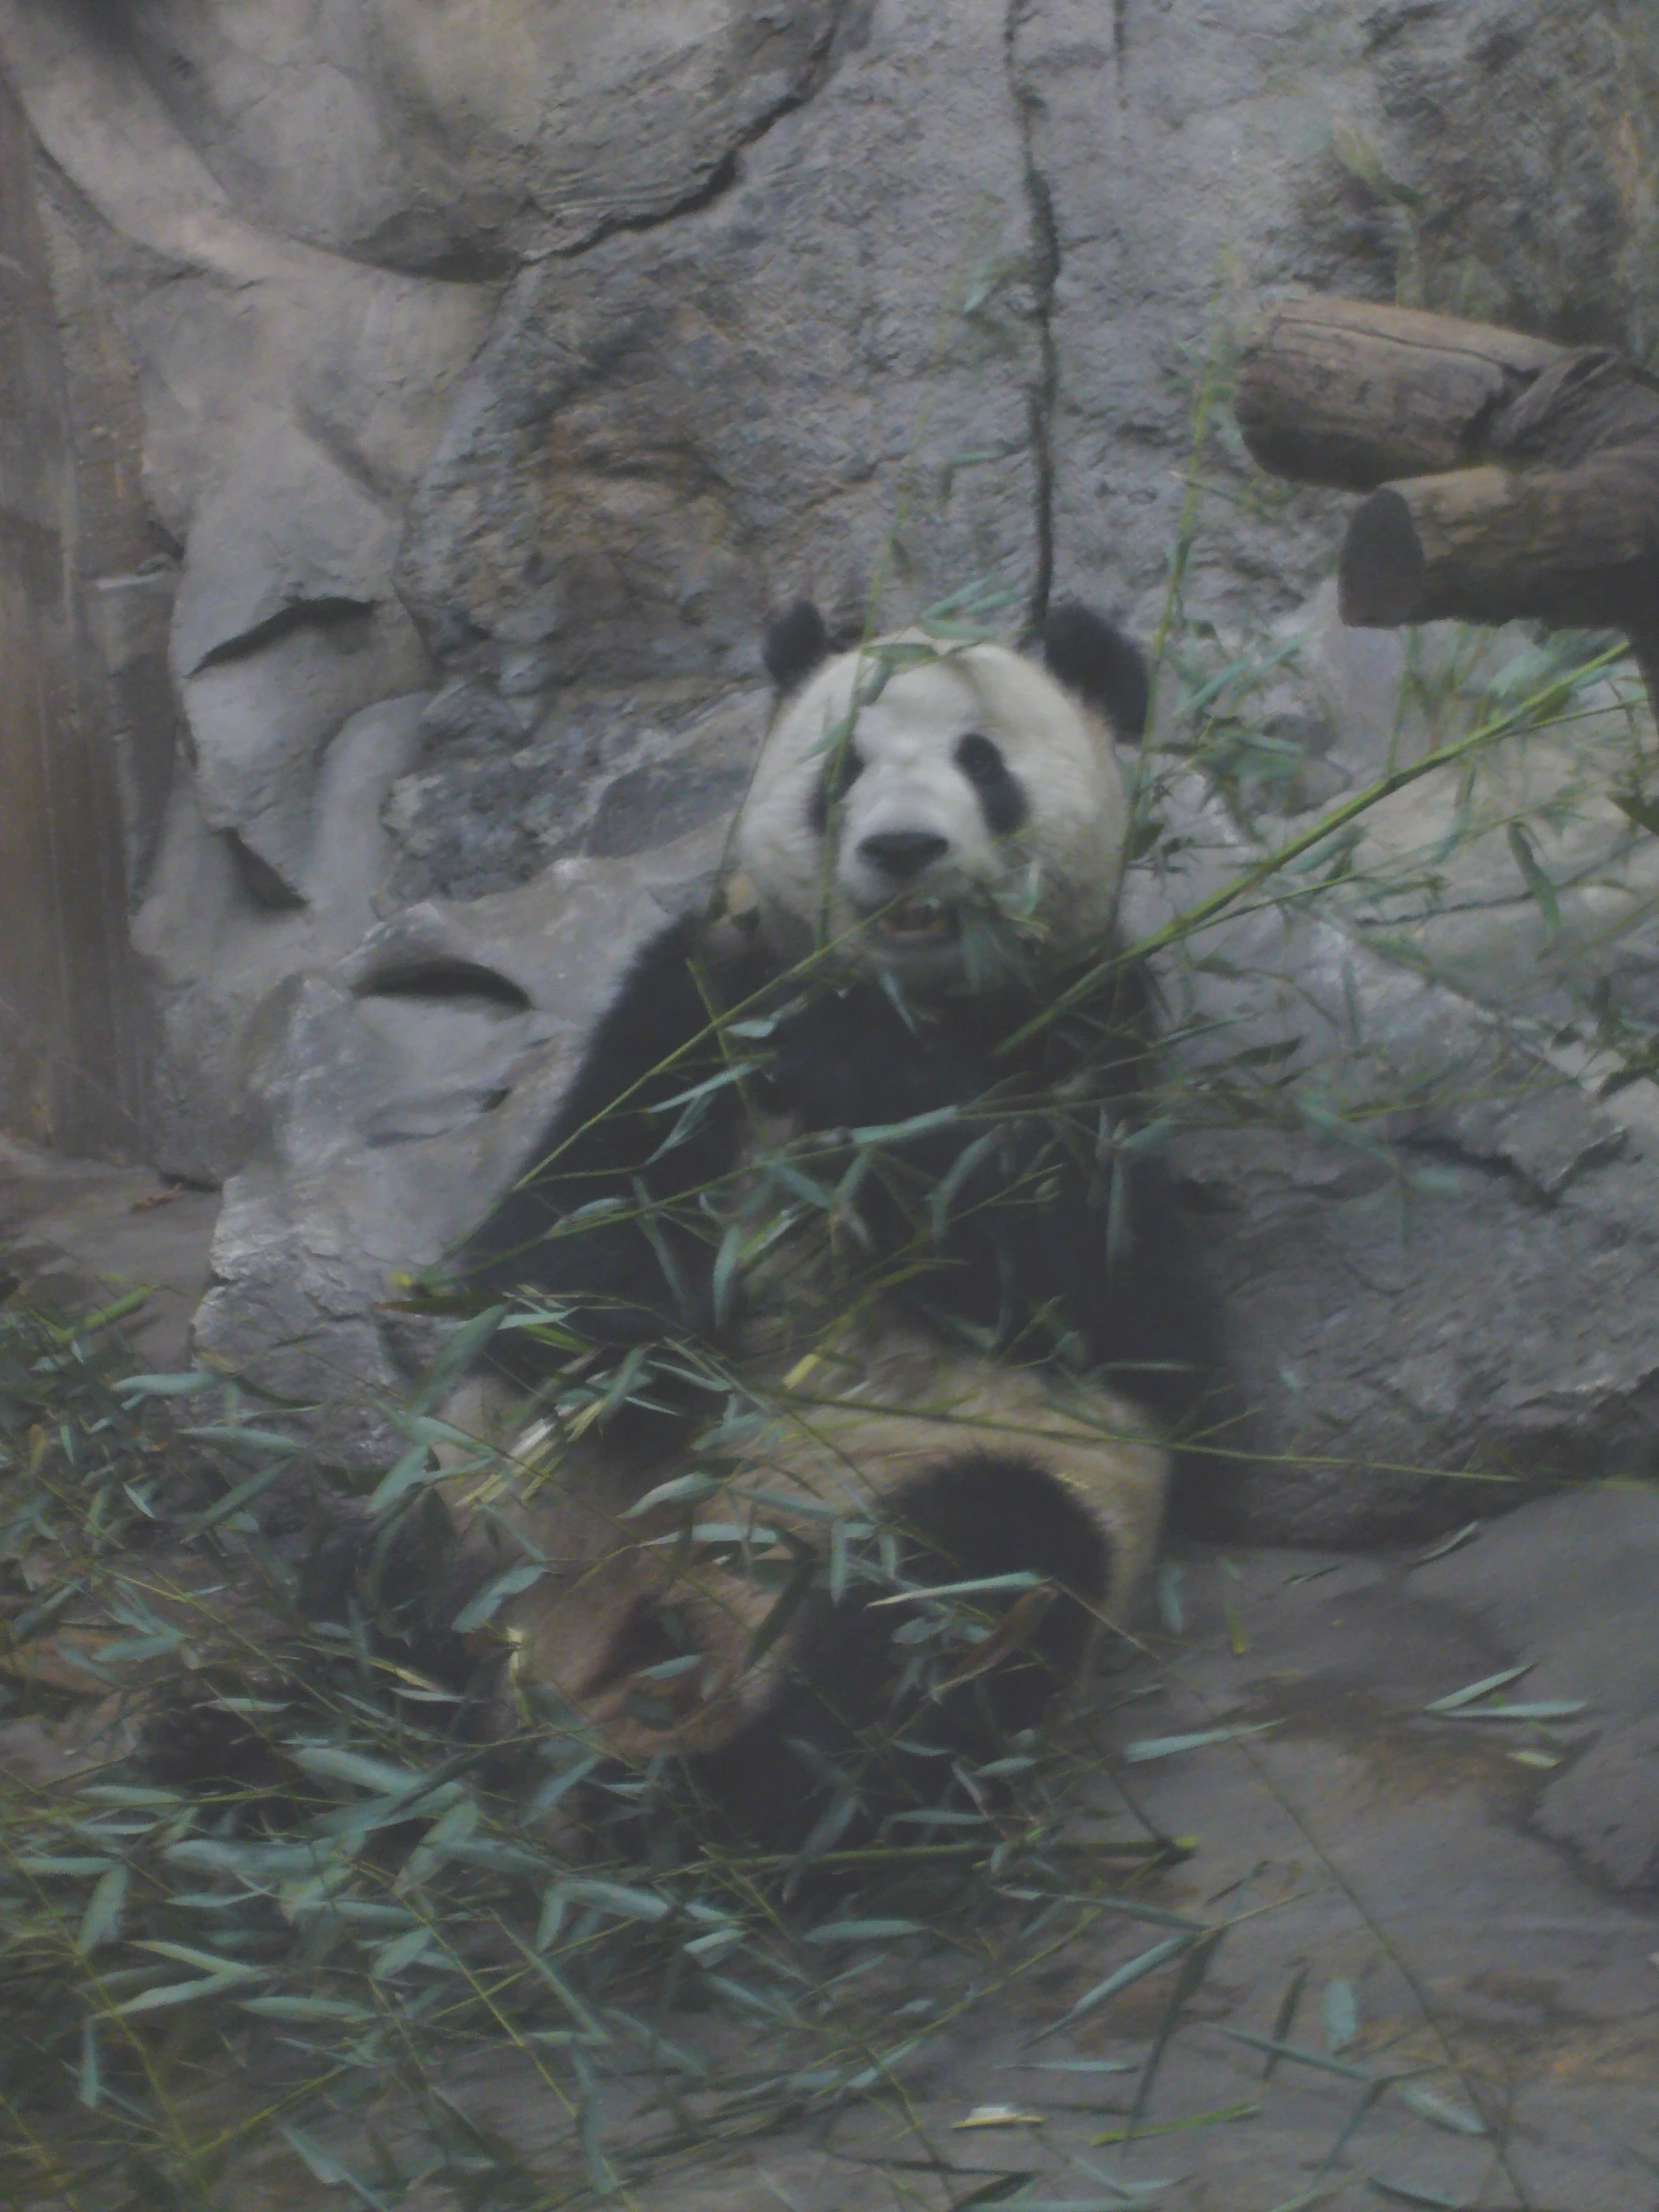 a panda bear in an exhibit looking up